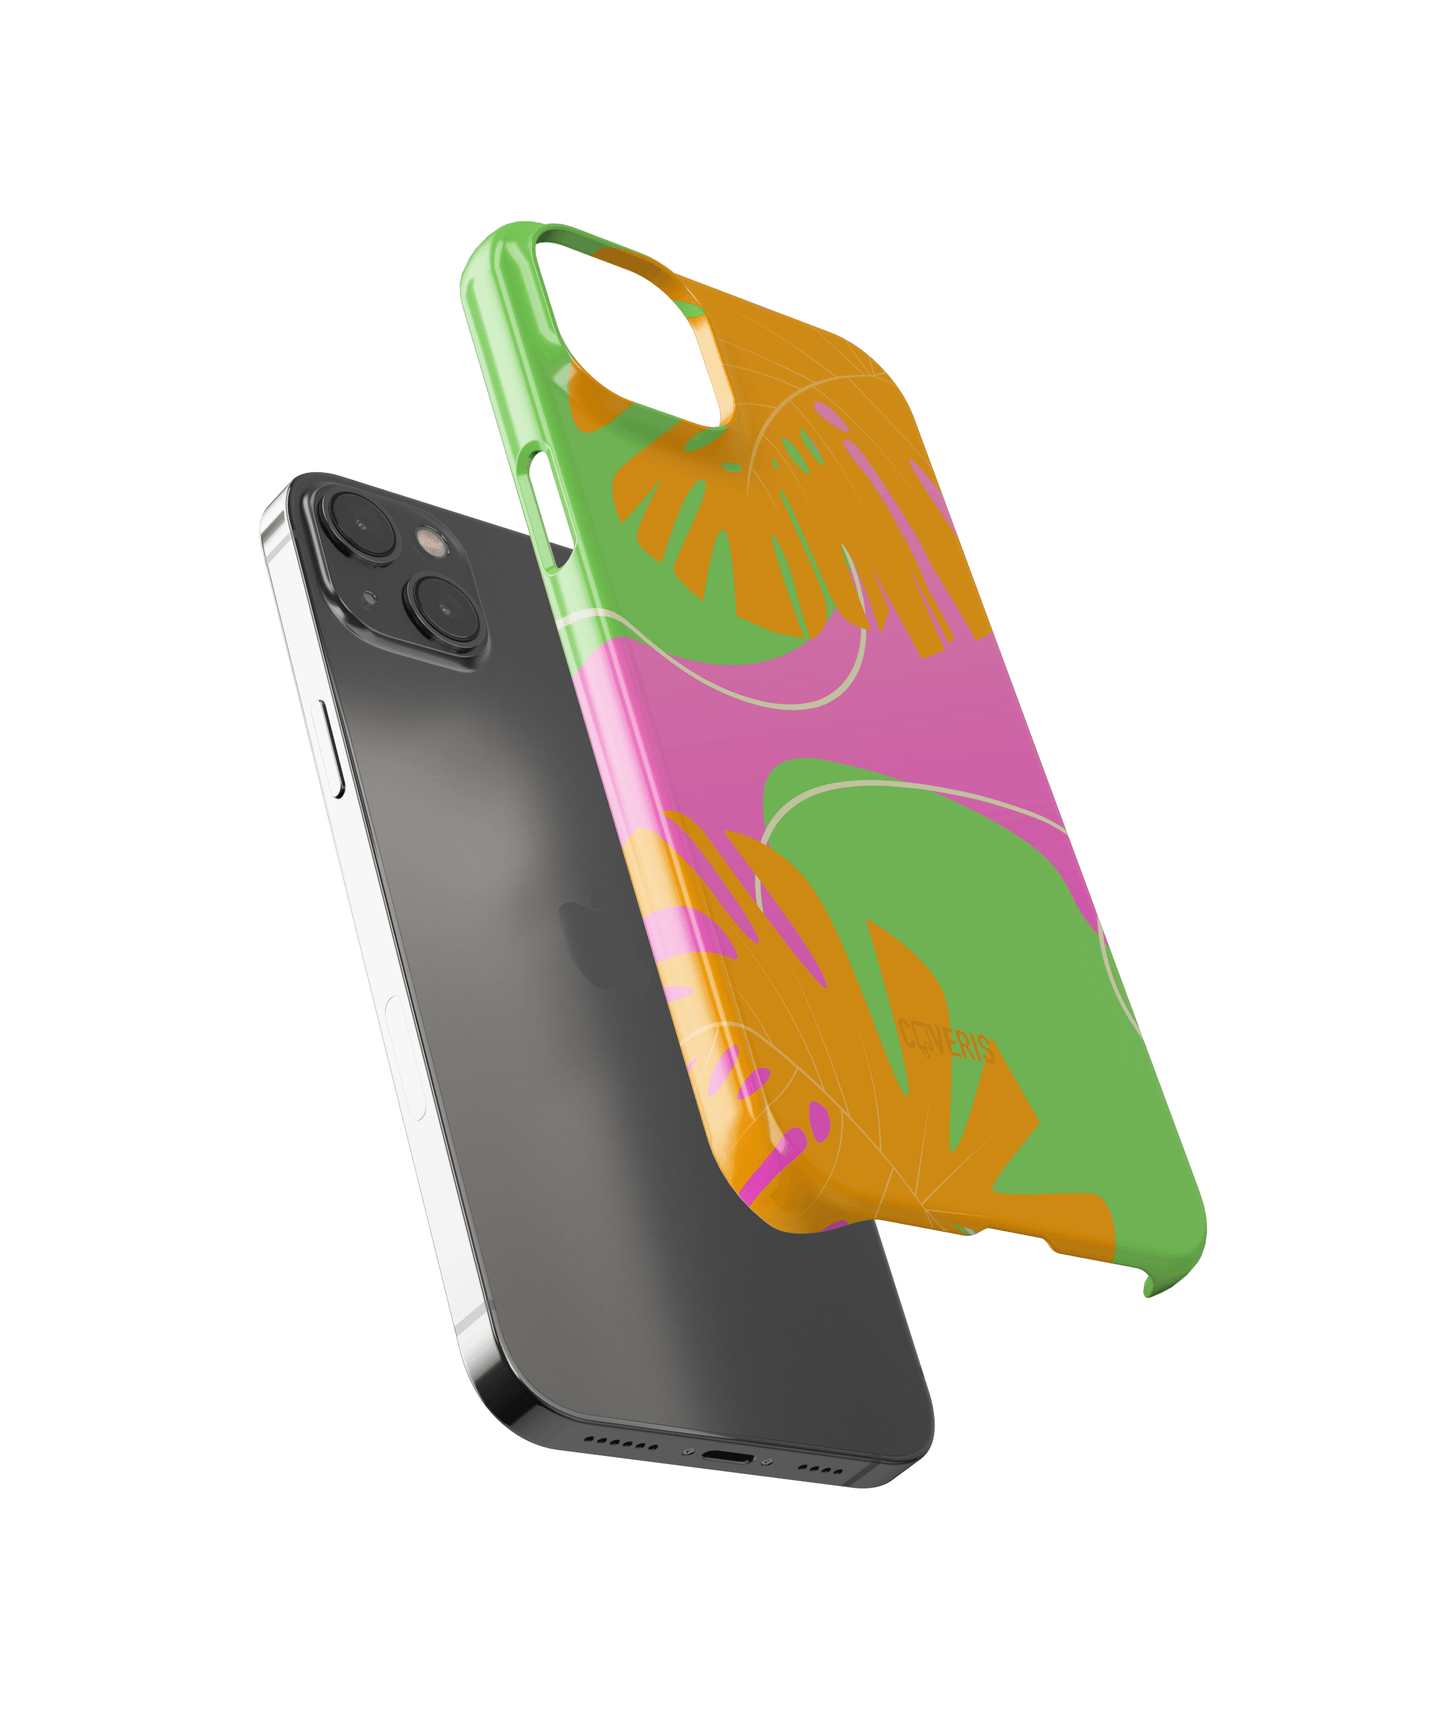 Neonpalms - Google Pixel 4 XL phone case